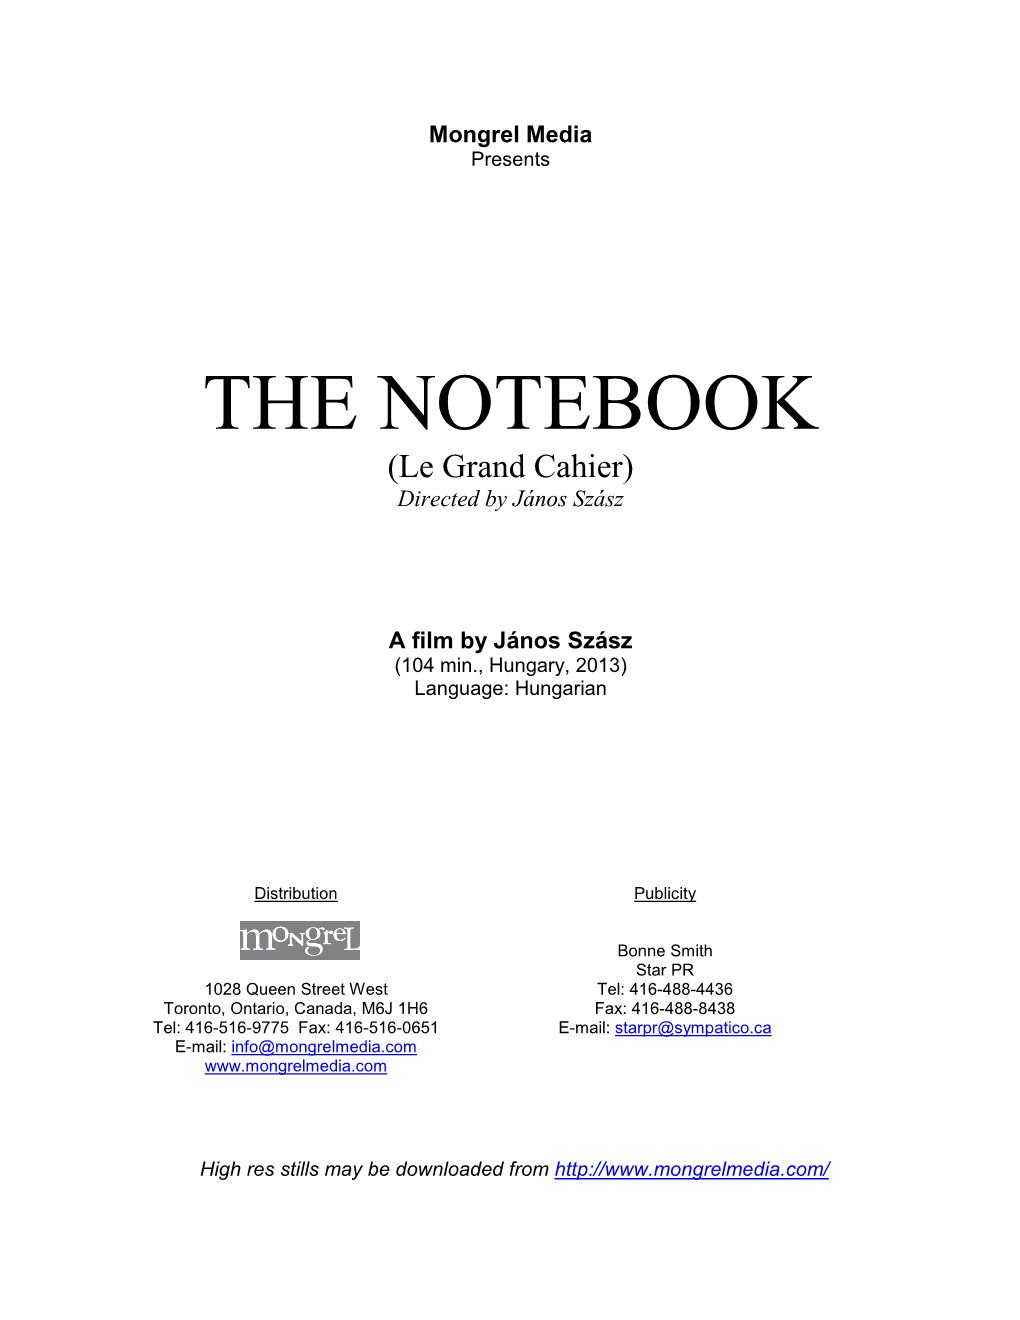 THE NOTEBOOK (Le Grand Cahier) Directed by János Szász